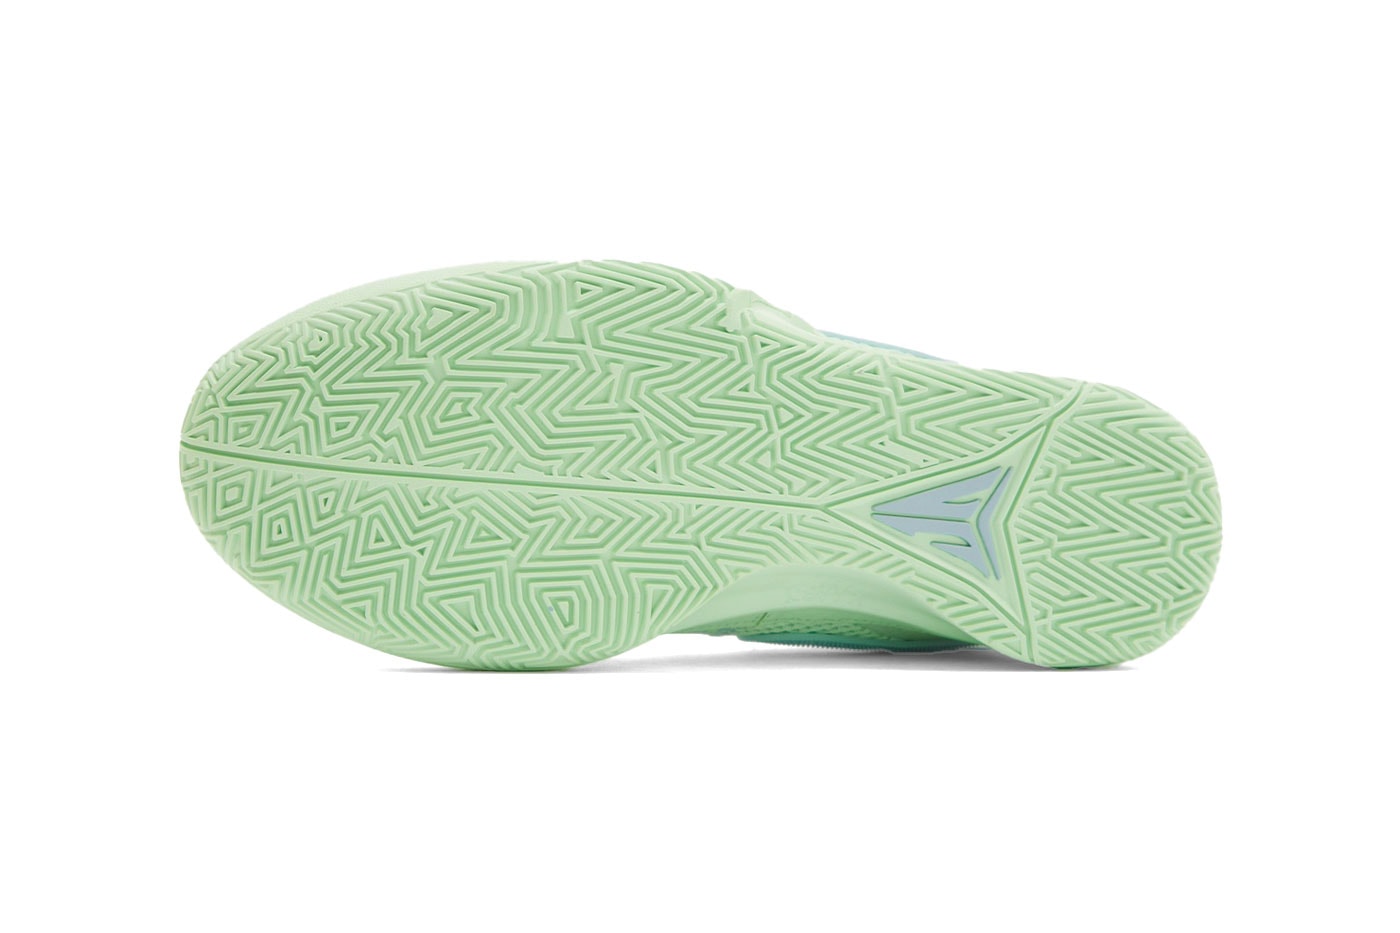 Nike Ja 1 Bright Mandarin Vapor Green Release Info